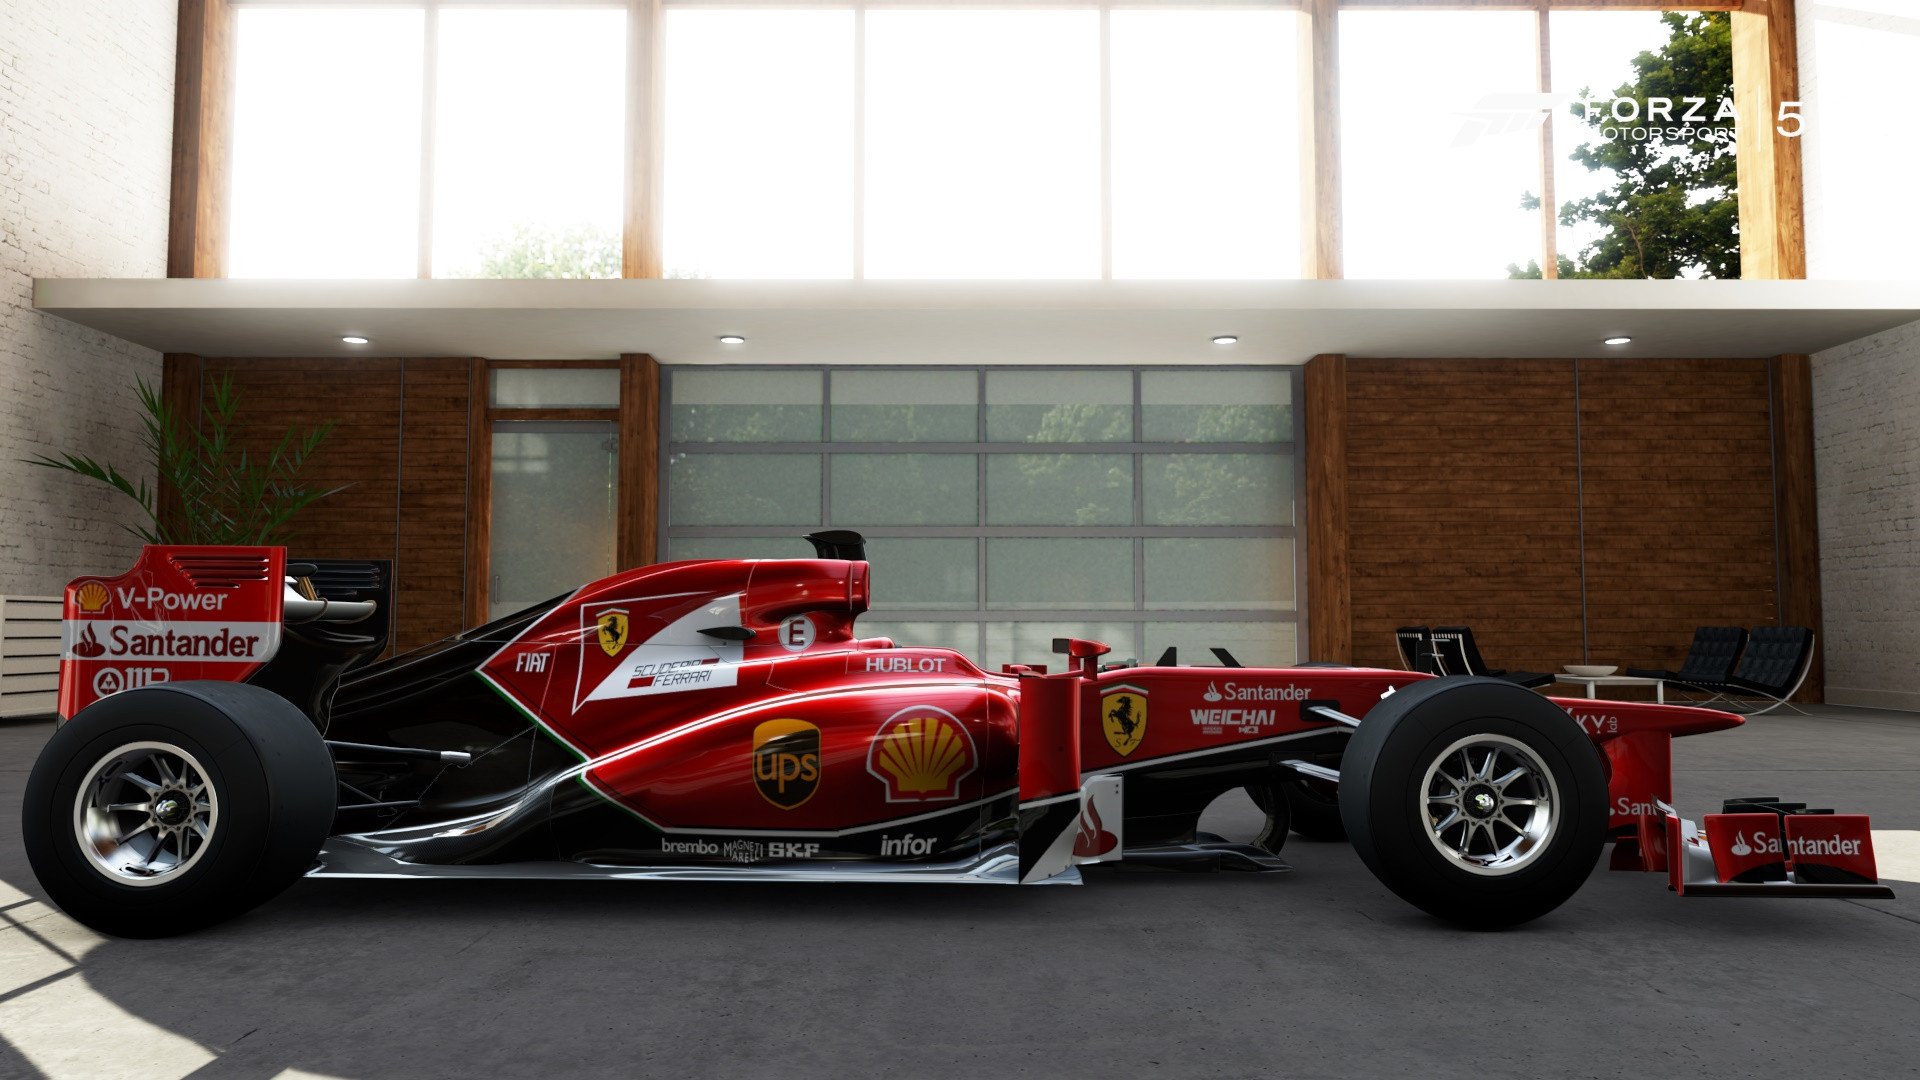 cars, Ferrari, Forza, Motorsport, 5, Videogames Wallpaper